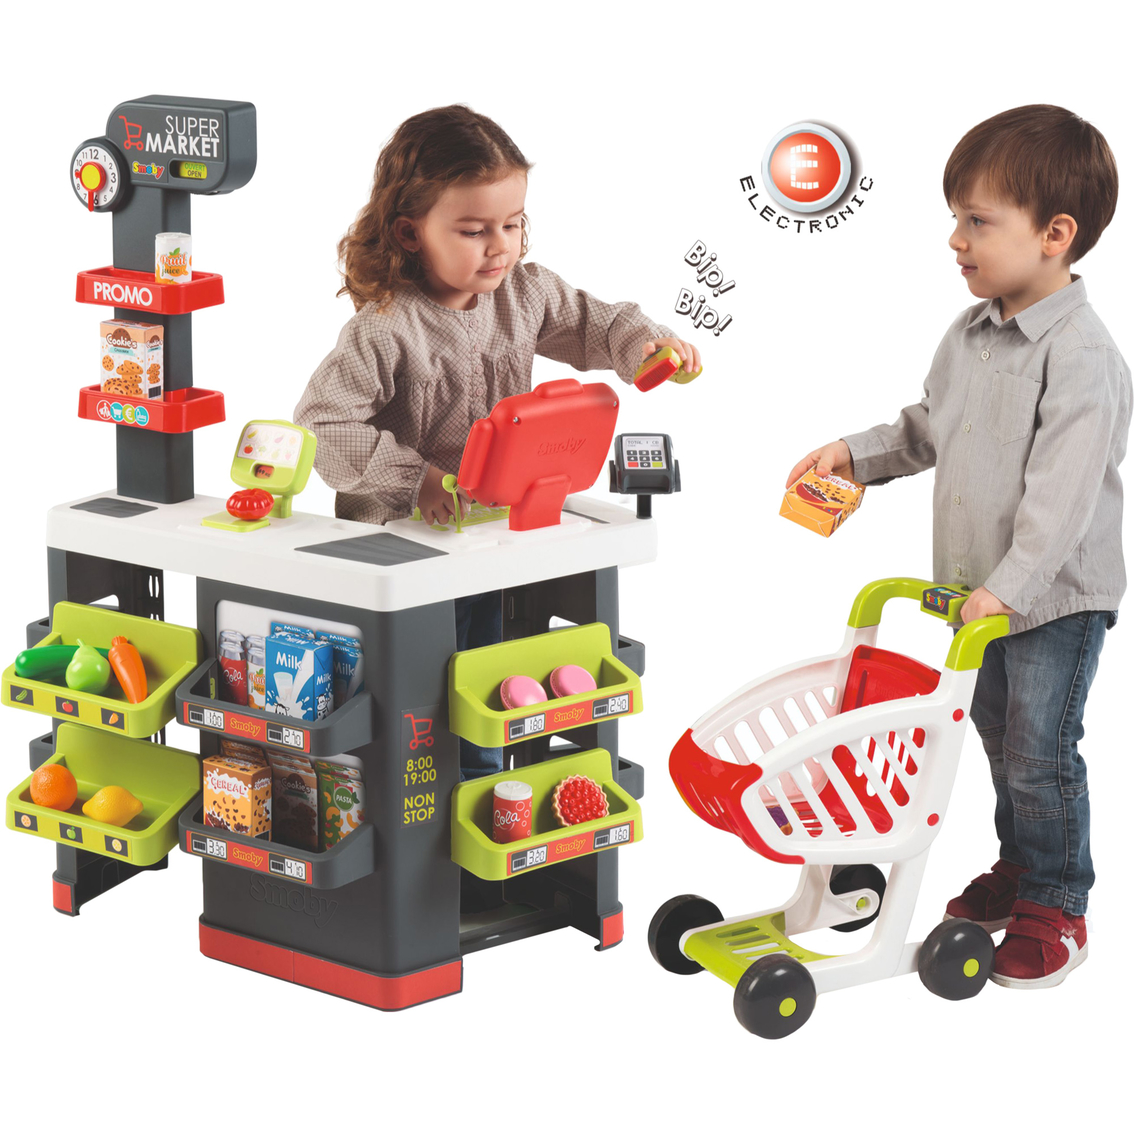 Smoby Toys Super Market Set - Image 3 of 6